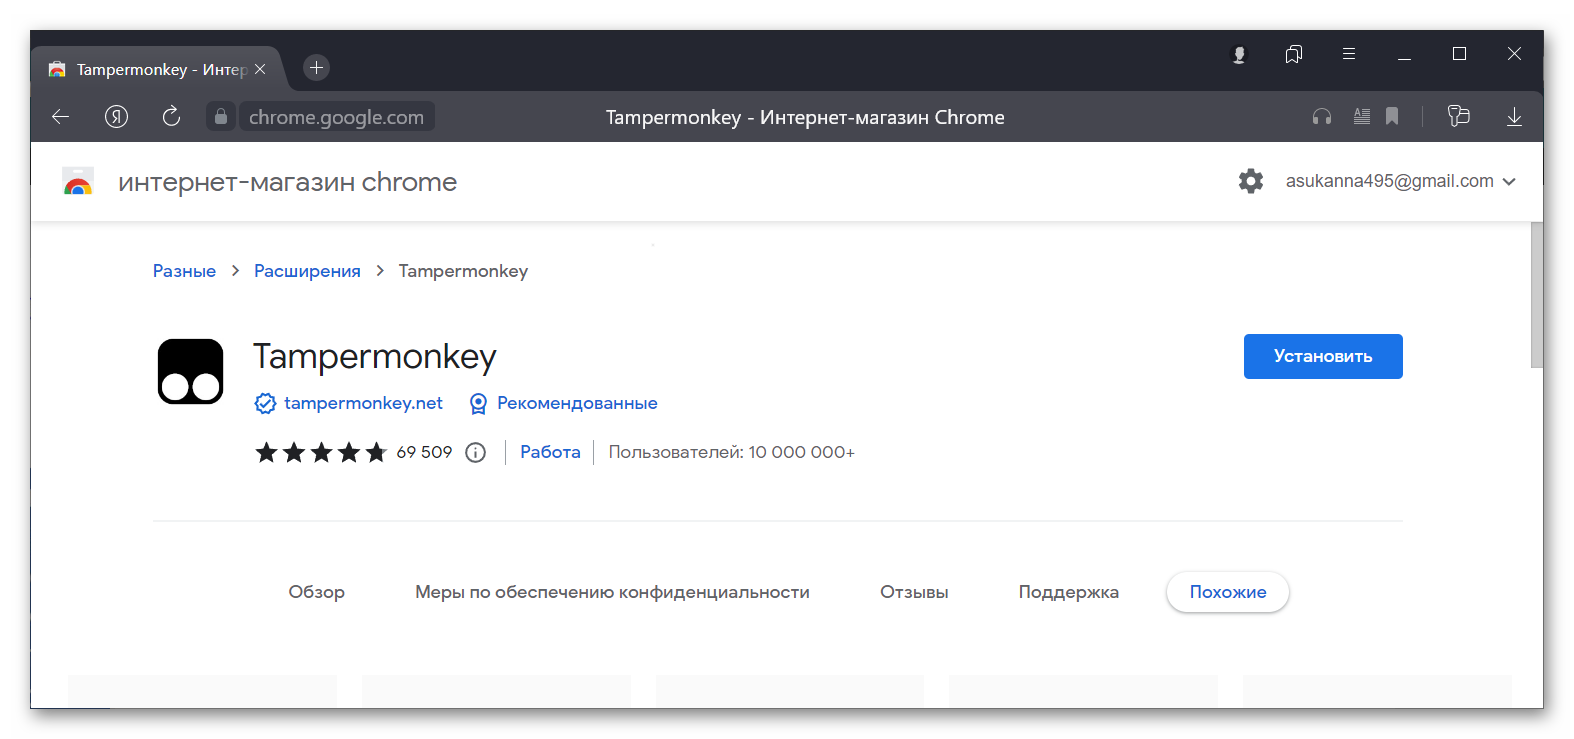 Tampermonkey - Интернет-магазин Chrome - Яндекс-Браузер